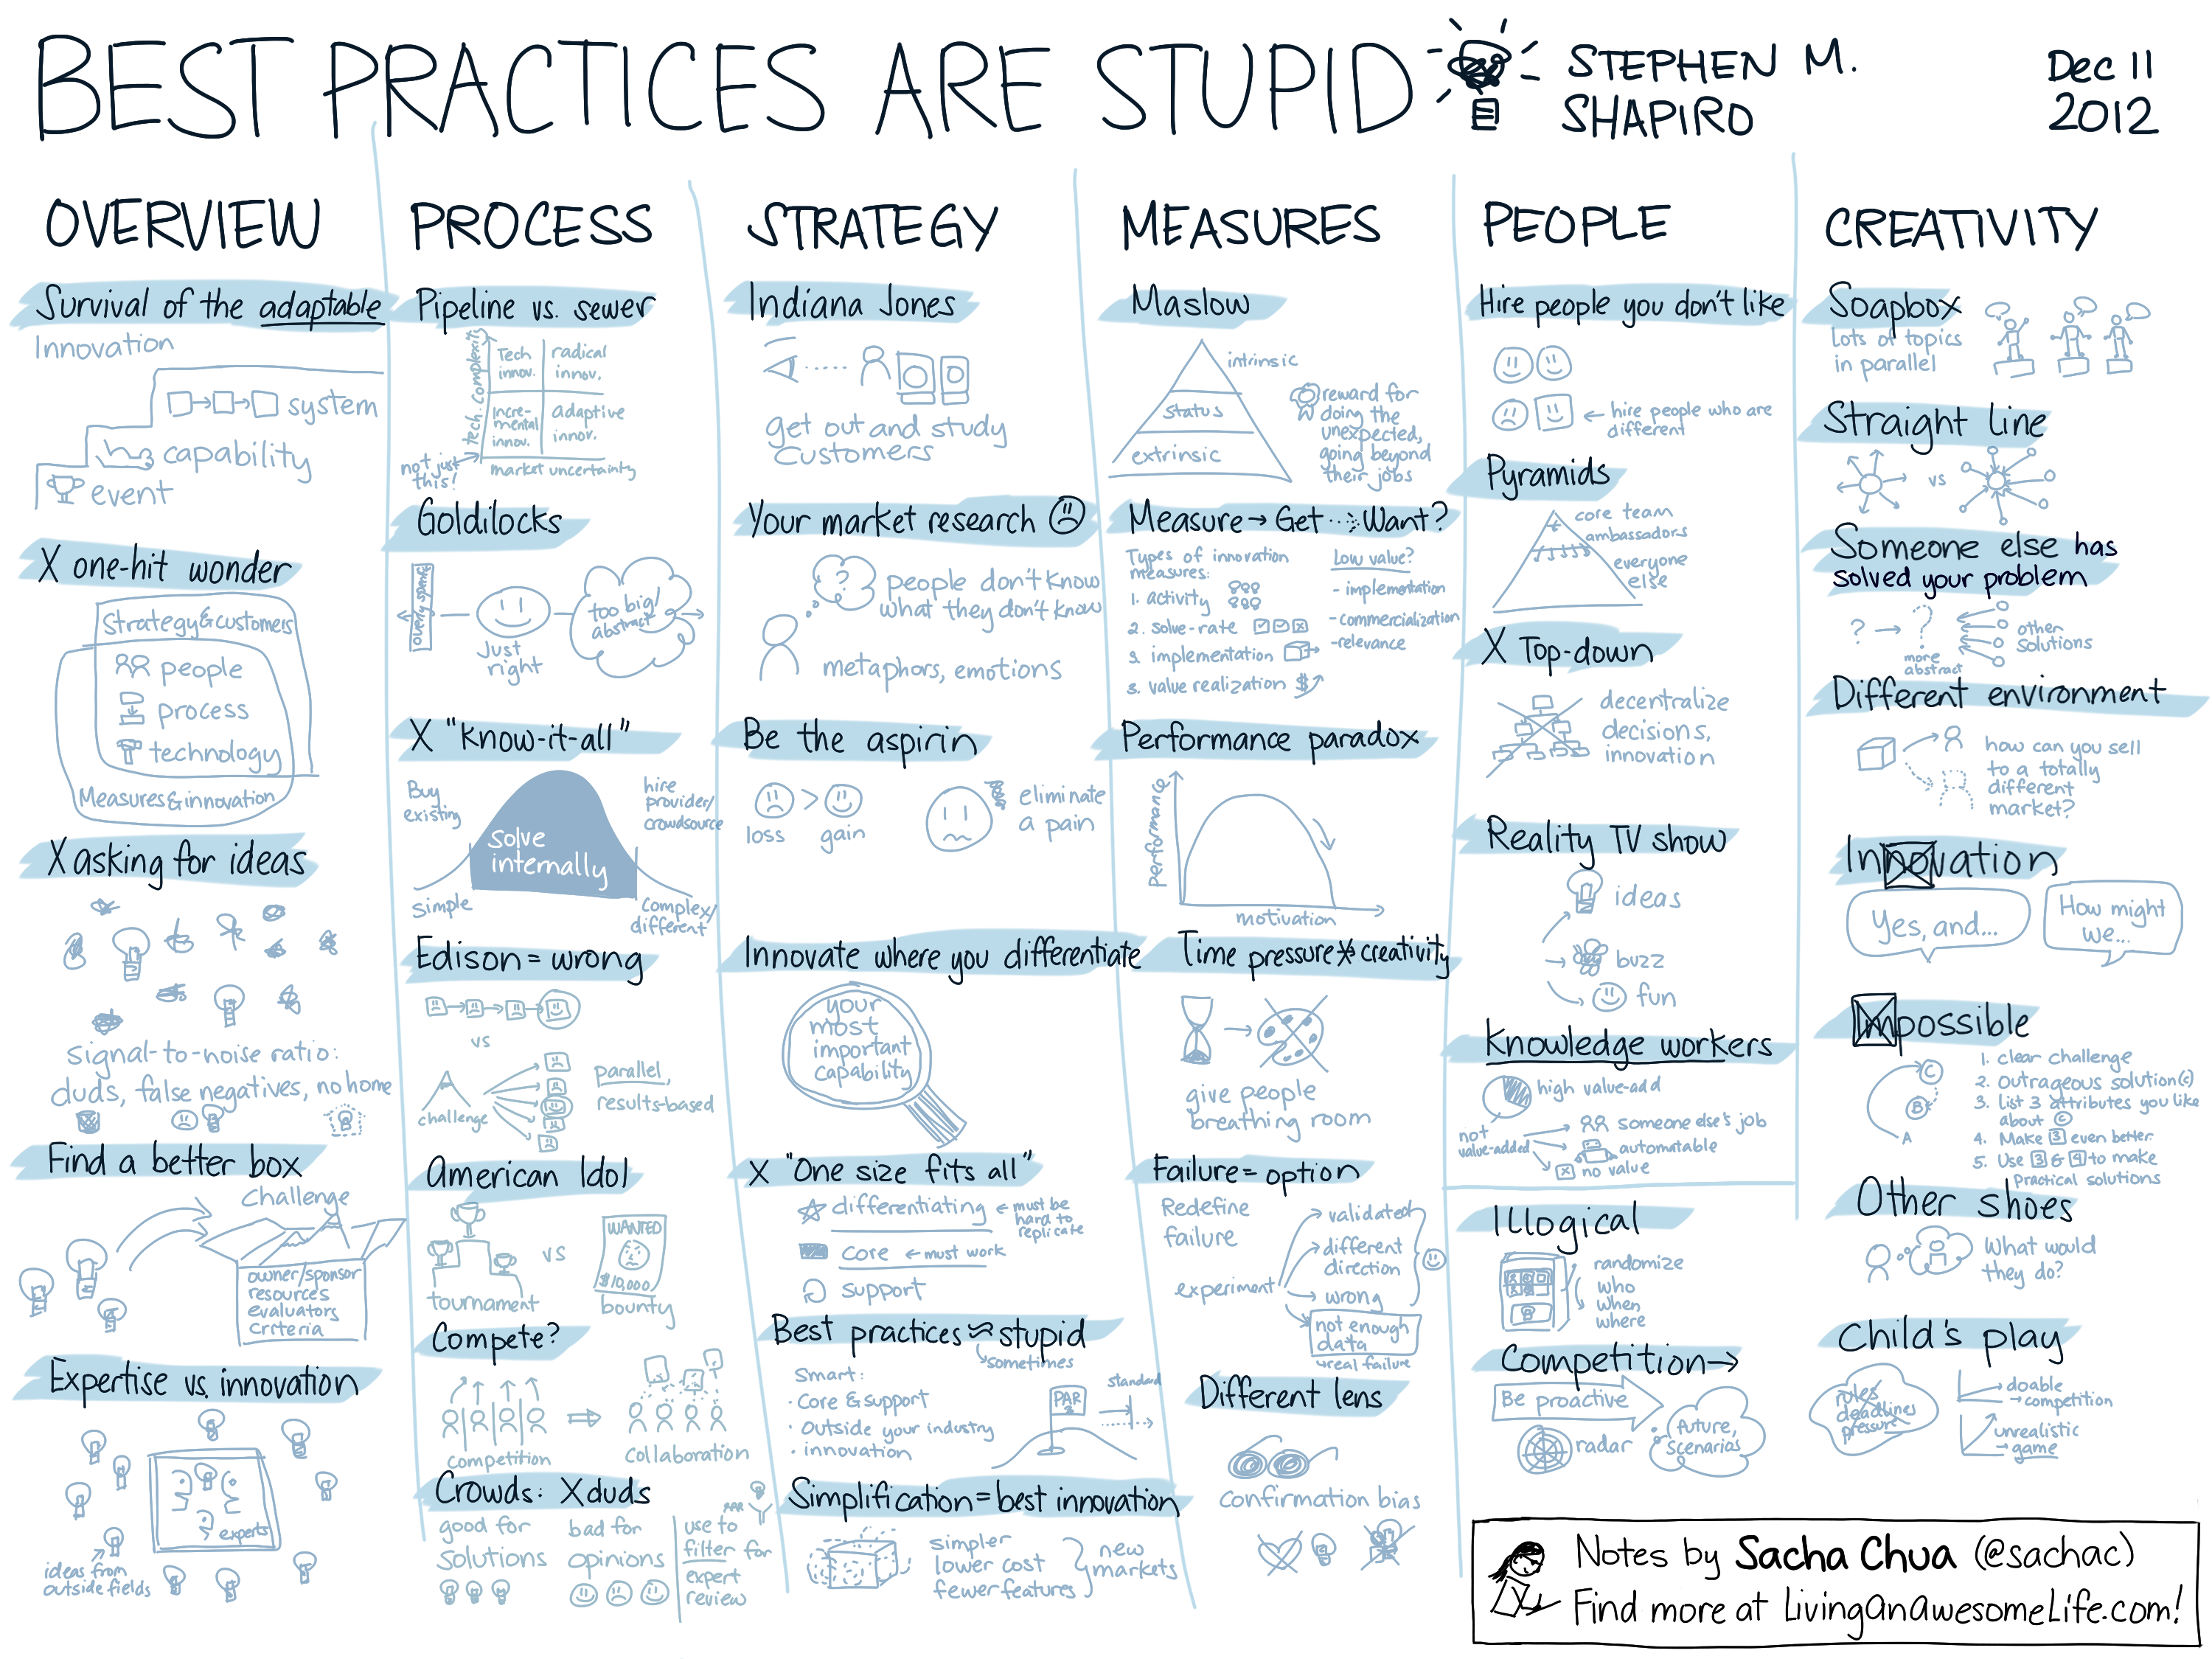 2012-12-11 Book - Best Practices Are Stupid - Stephen M. Shapiro